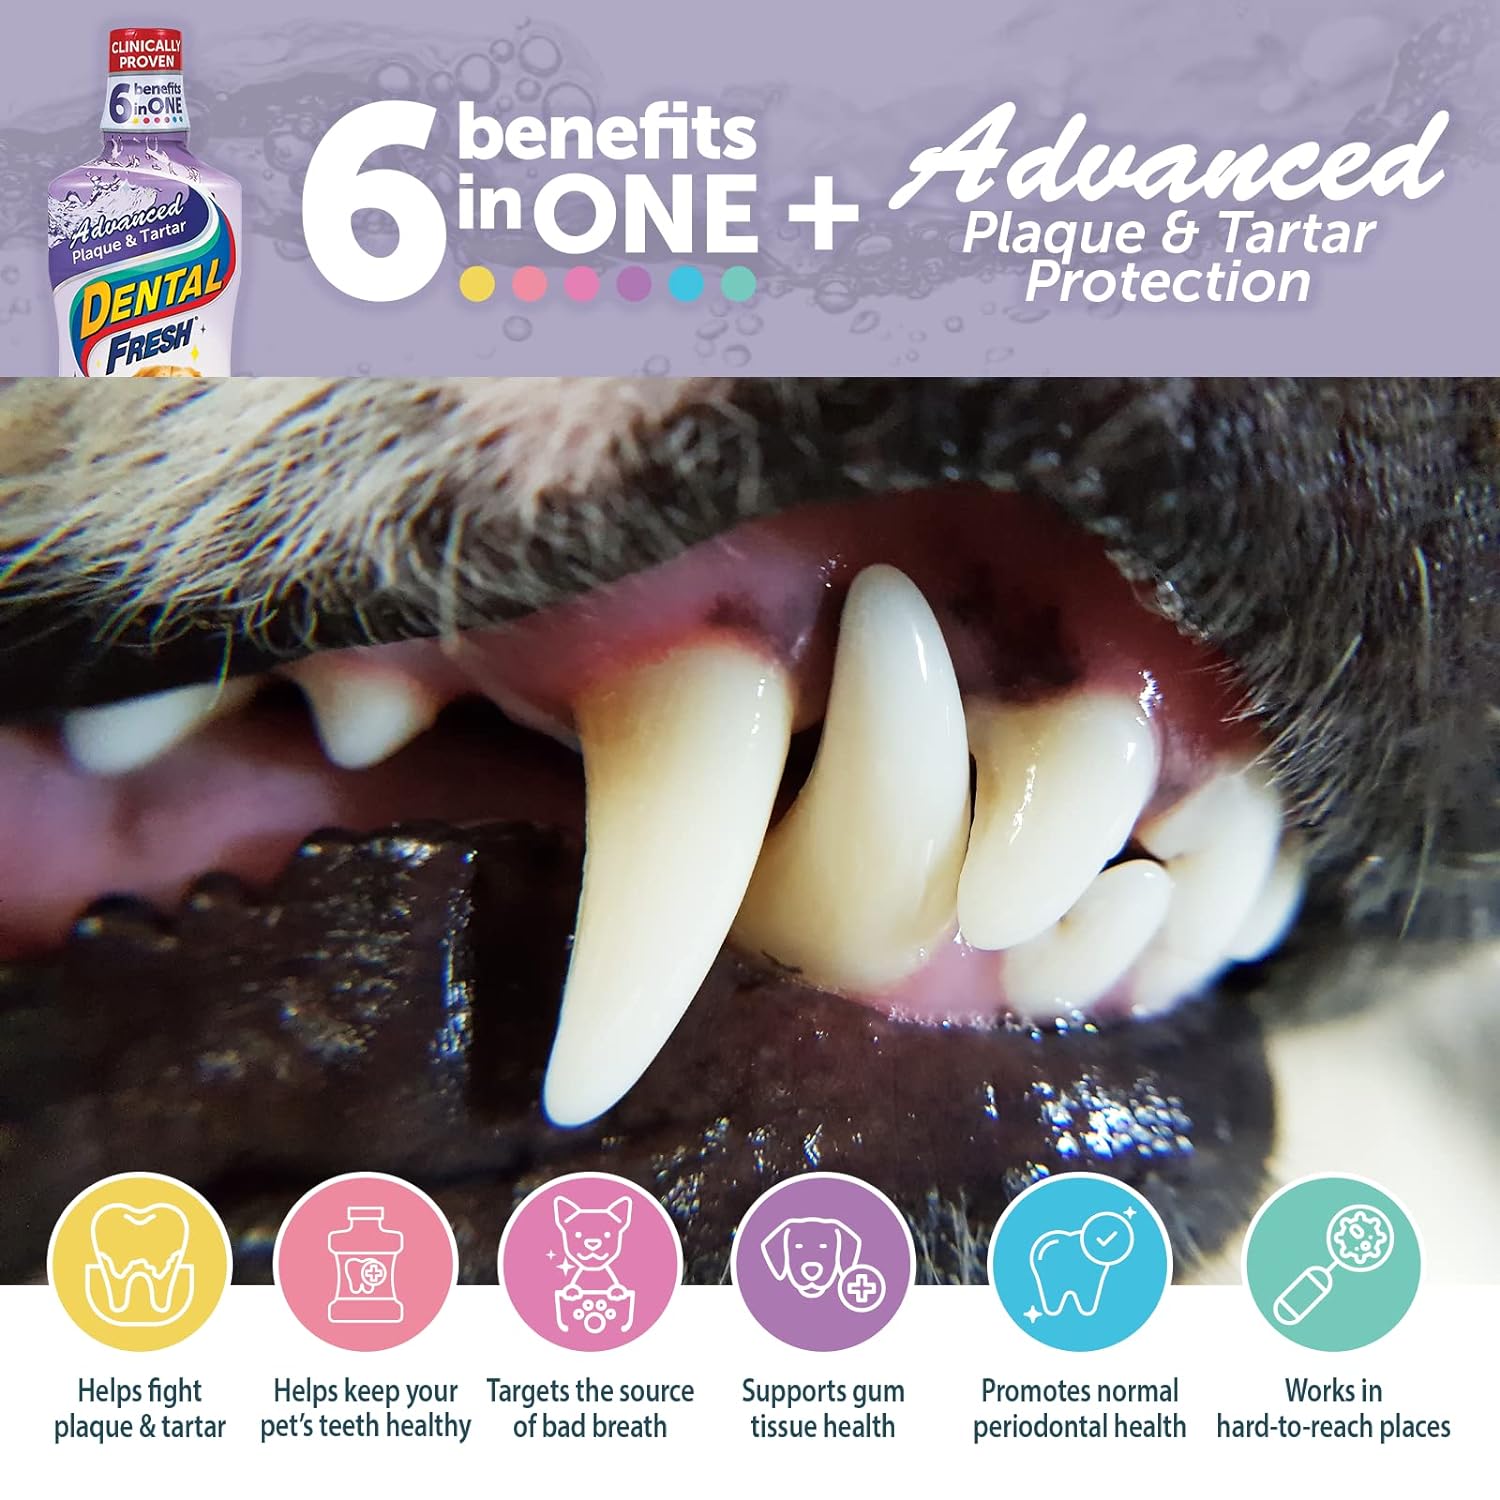 Dental Fresh Advanced Plaque and Tartar Water Additive, 17oz – Dog Teeth Cleaning Formula for Fresh Breath and Optimal Oral Health